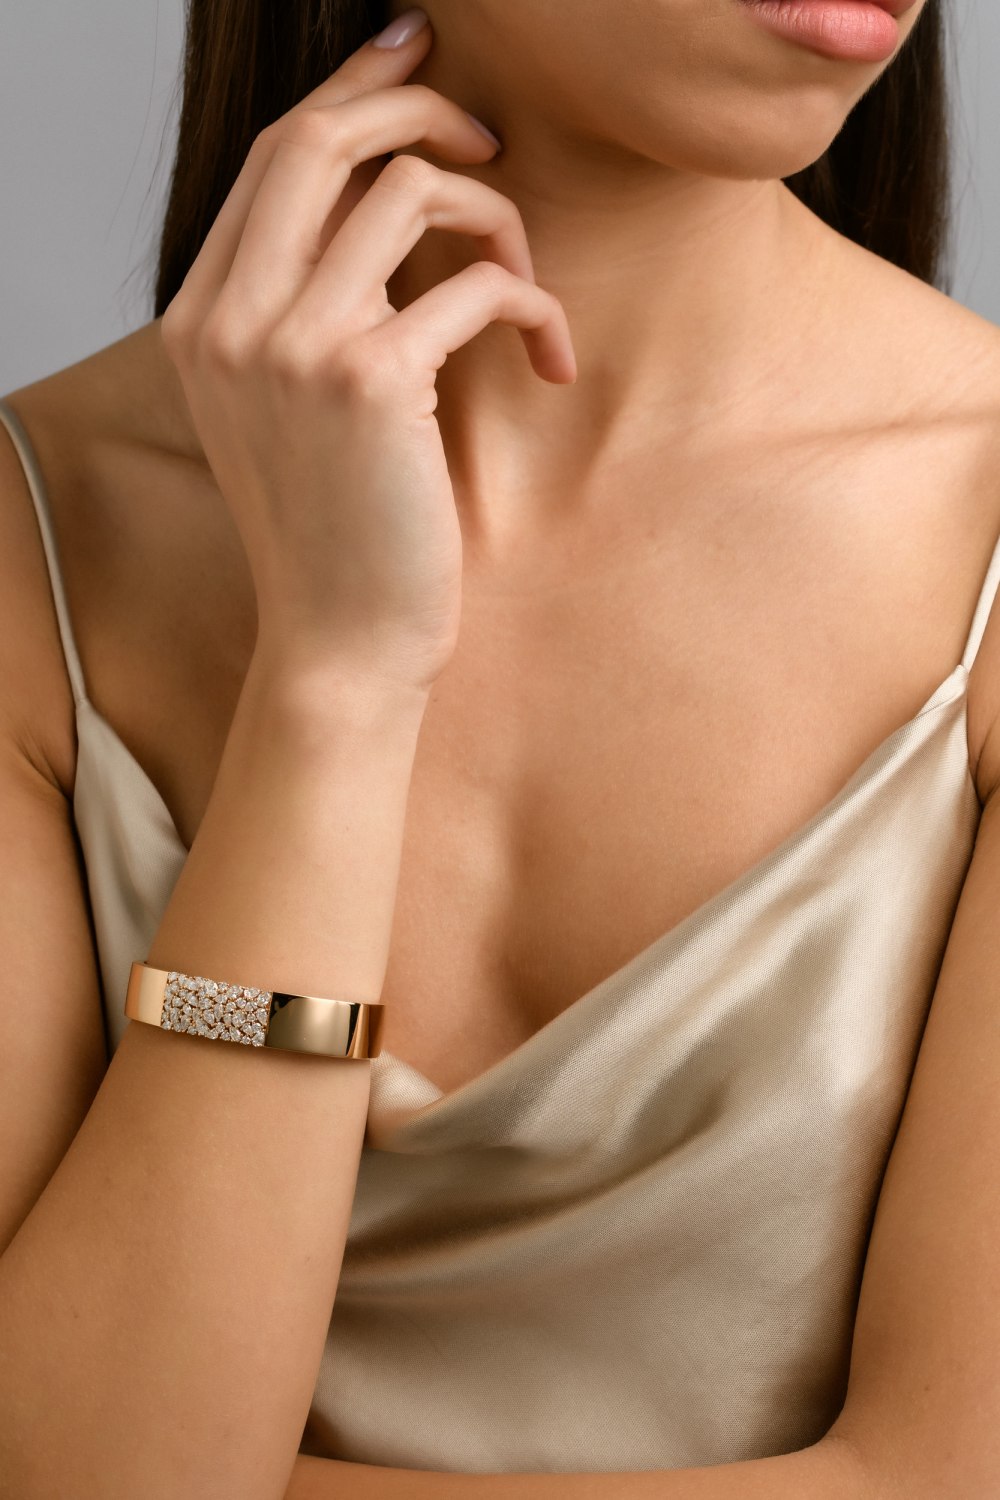 KESSARIS - Diamond Golden Cuff Bracelet